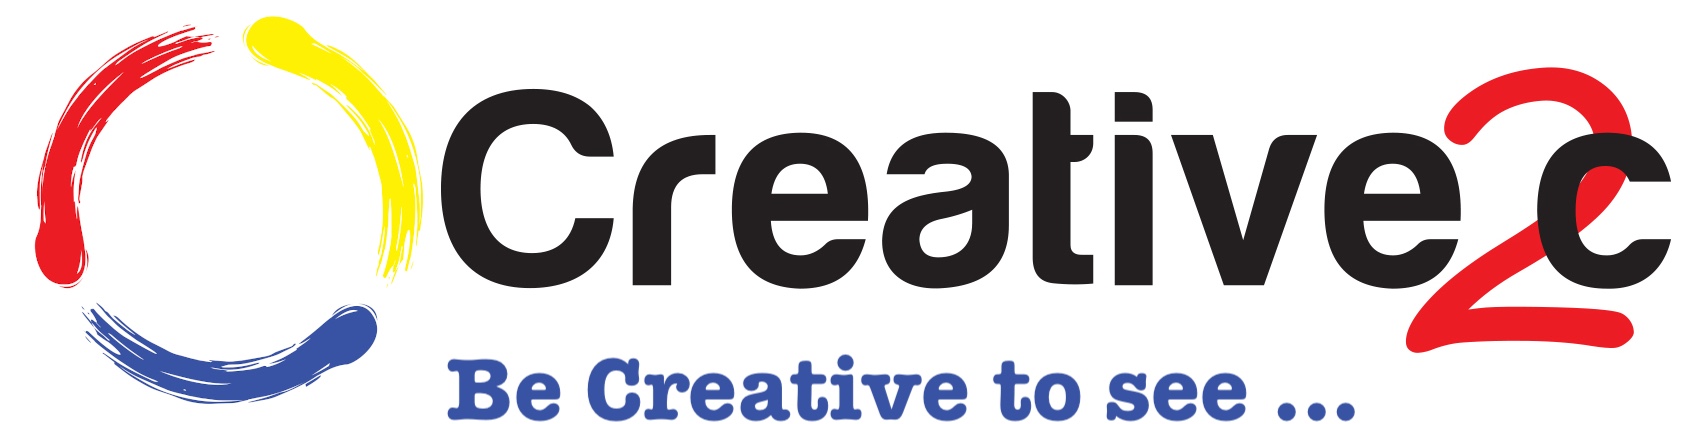 creative2c header Logo